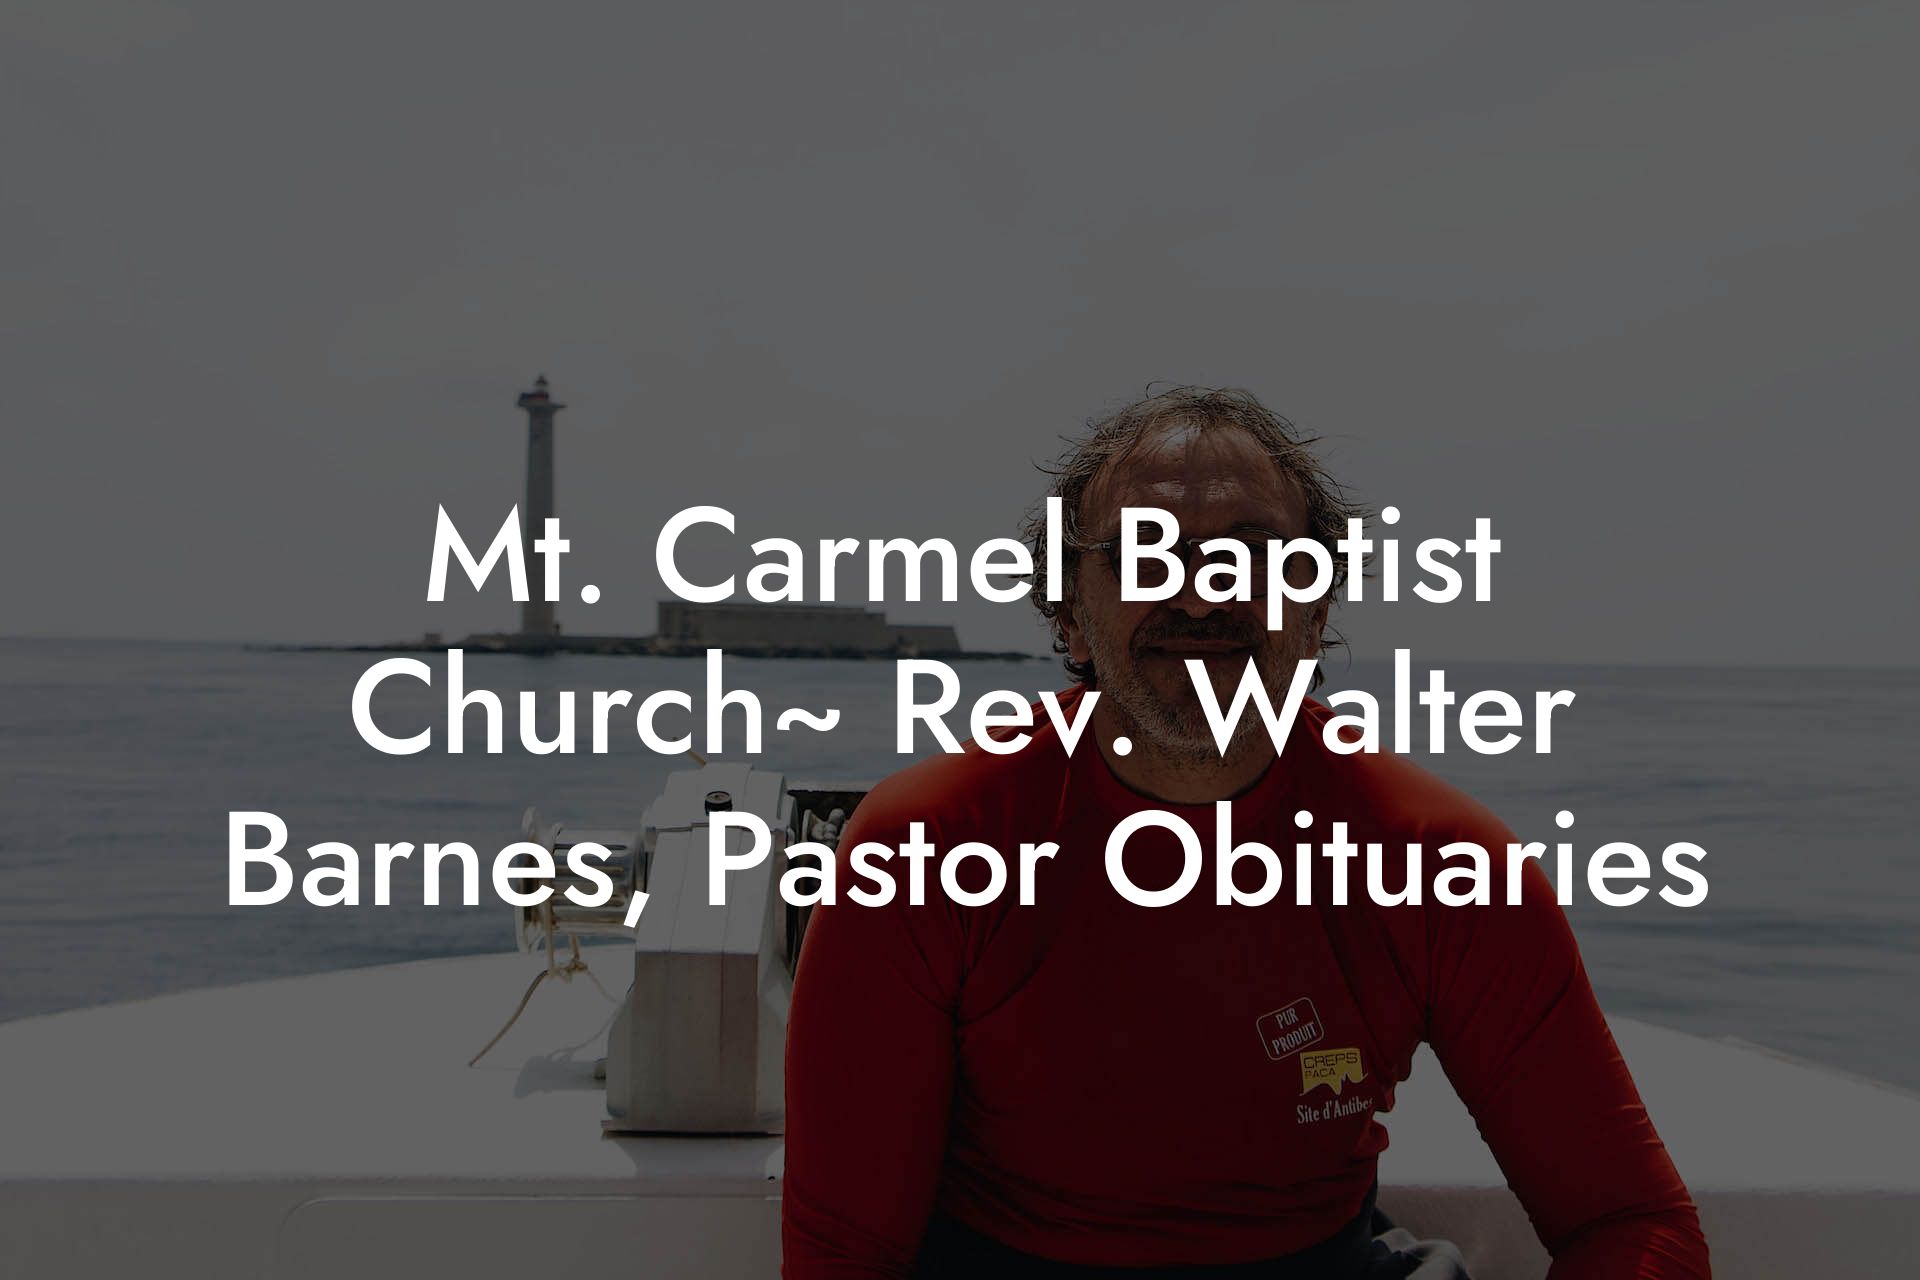 Mt. Carmel Baptist Church~ Rev. Walter Barnes, Pastor Obituaries